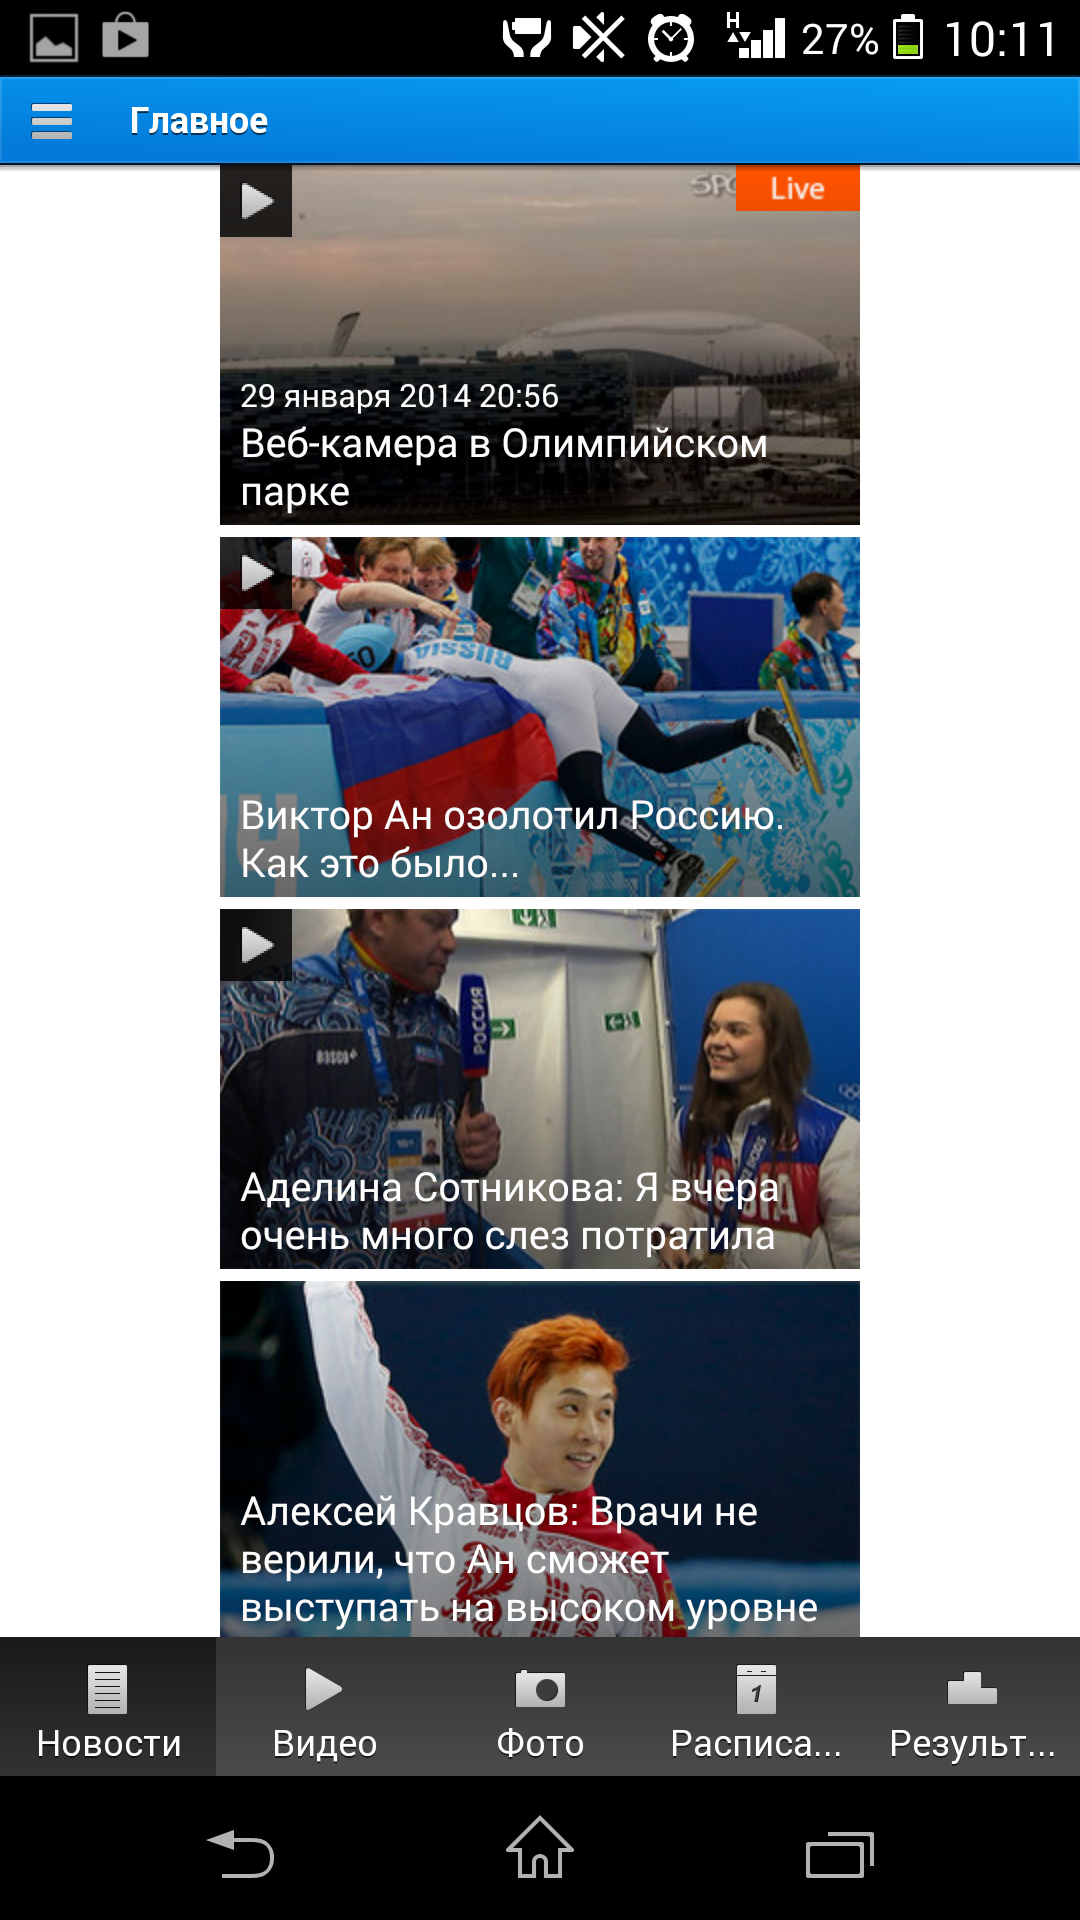 Https news sportbox ru результаты спорта. Спортбокс. Sportbox.ru. Спортбокс футбол. Спортбокс новости спорта.